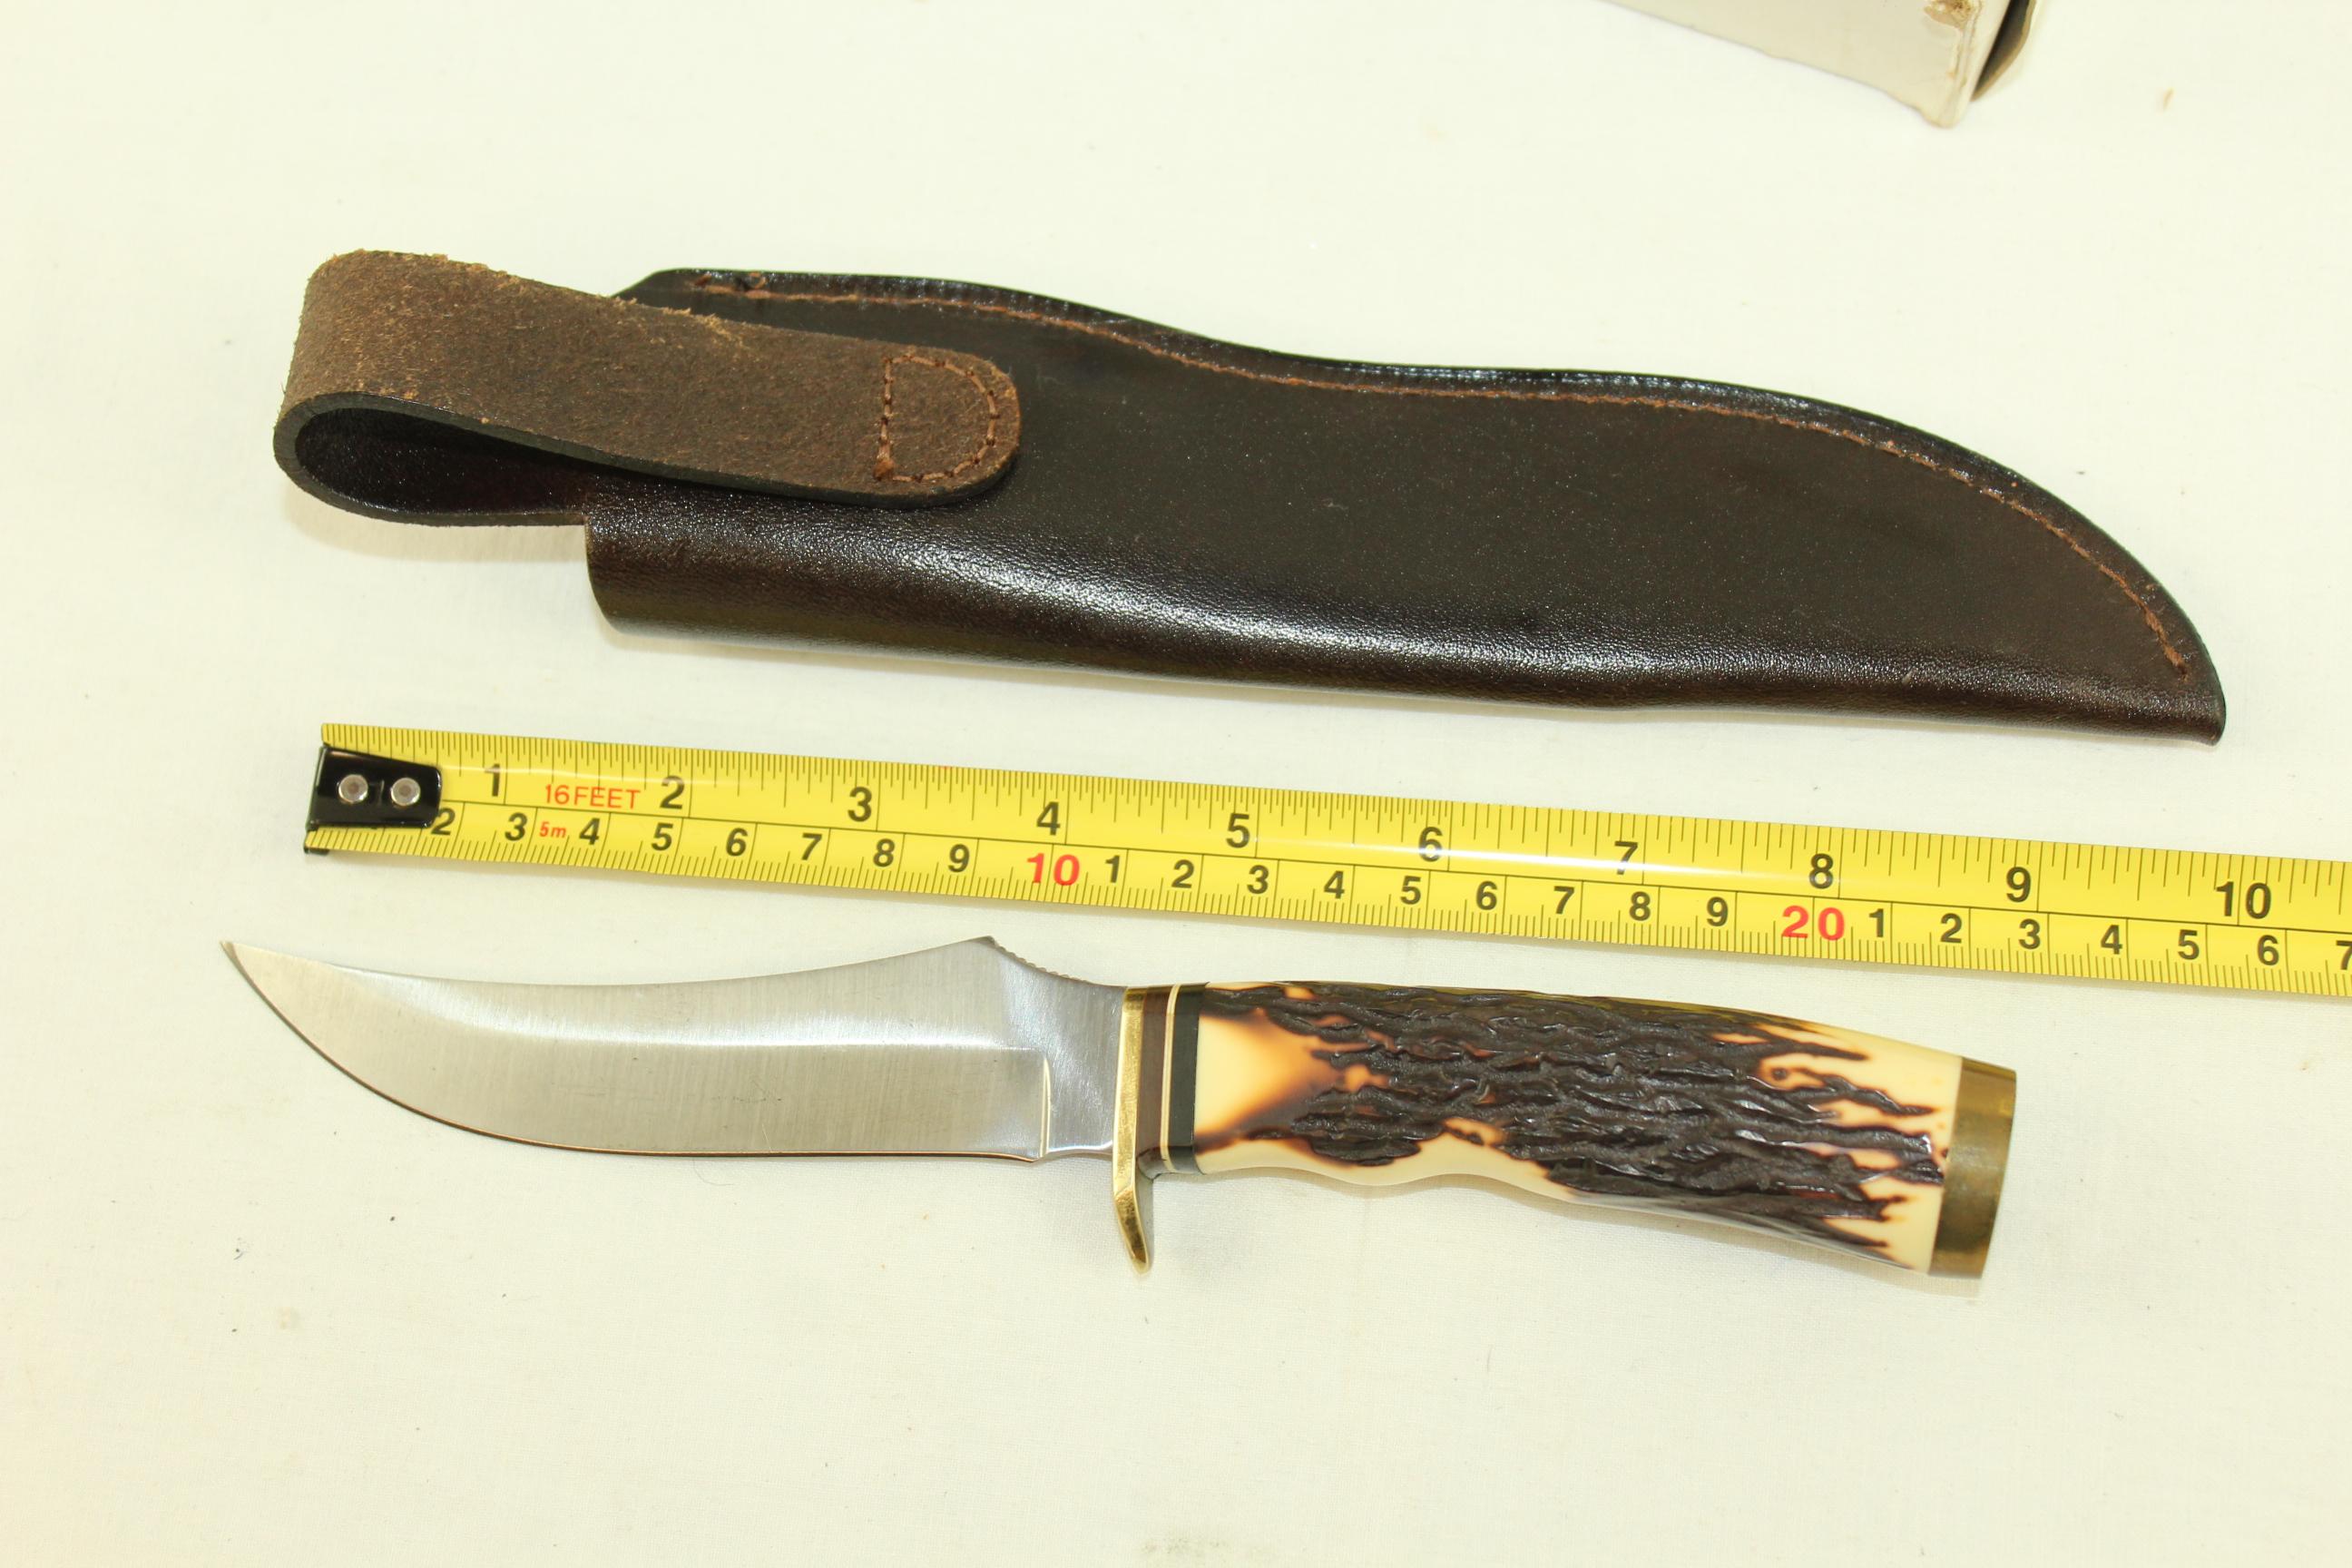 Schrade U.S.A. 498DU "Ducks Unlimited" Hunting Knife & Sheath